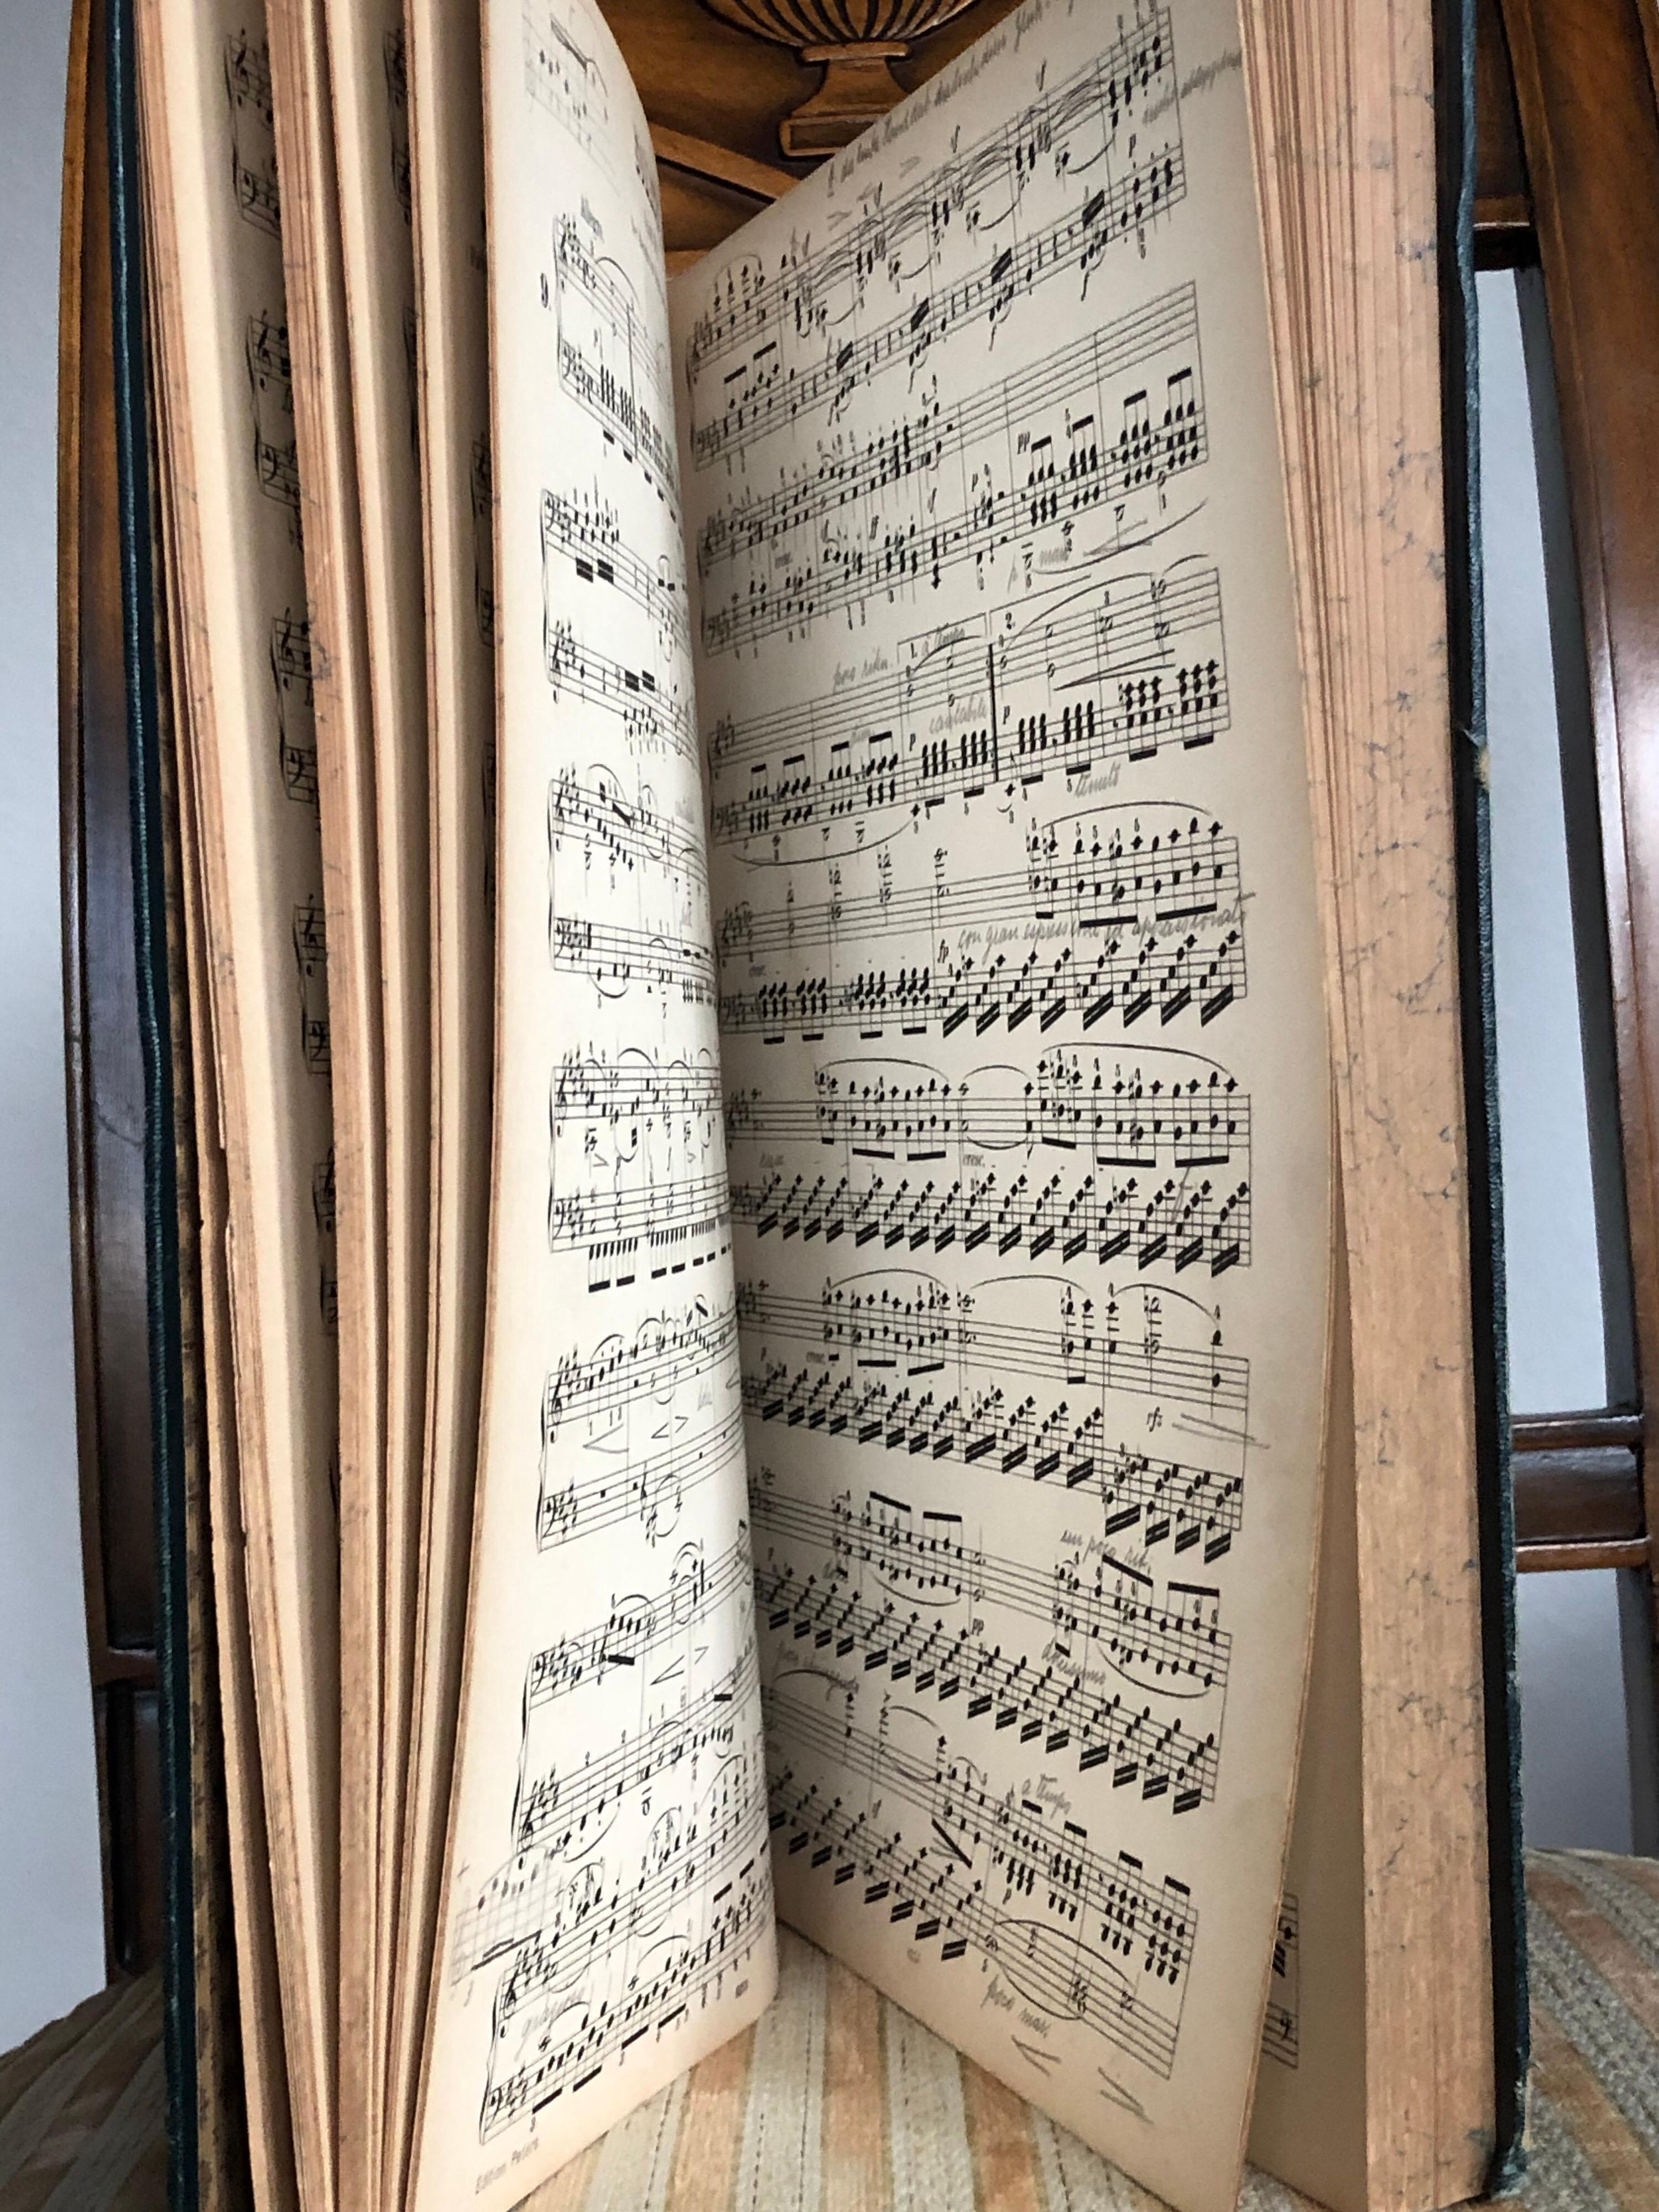 Arts and Crafts Ludwig van Beethoven Sonaten Sheet Music Book, C. F. Peters, Leipzig, circa 1820